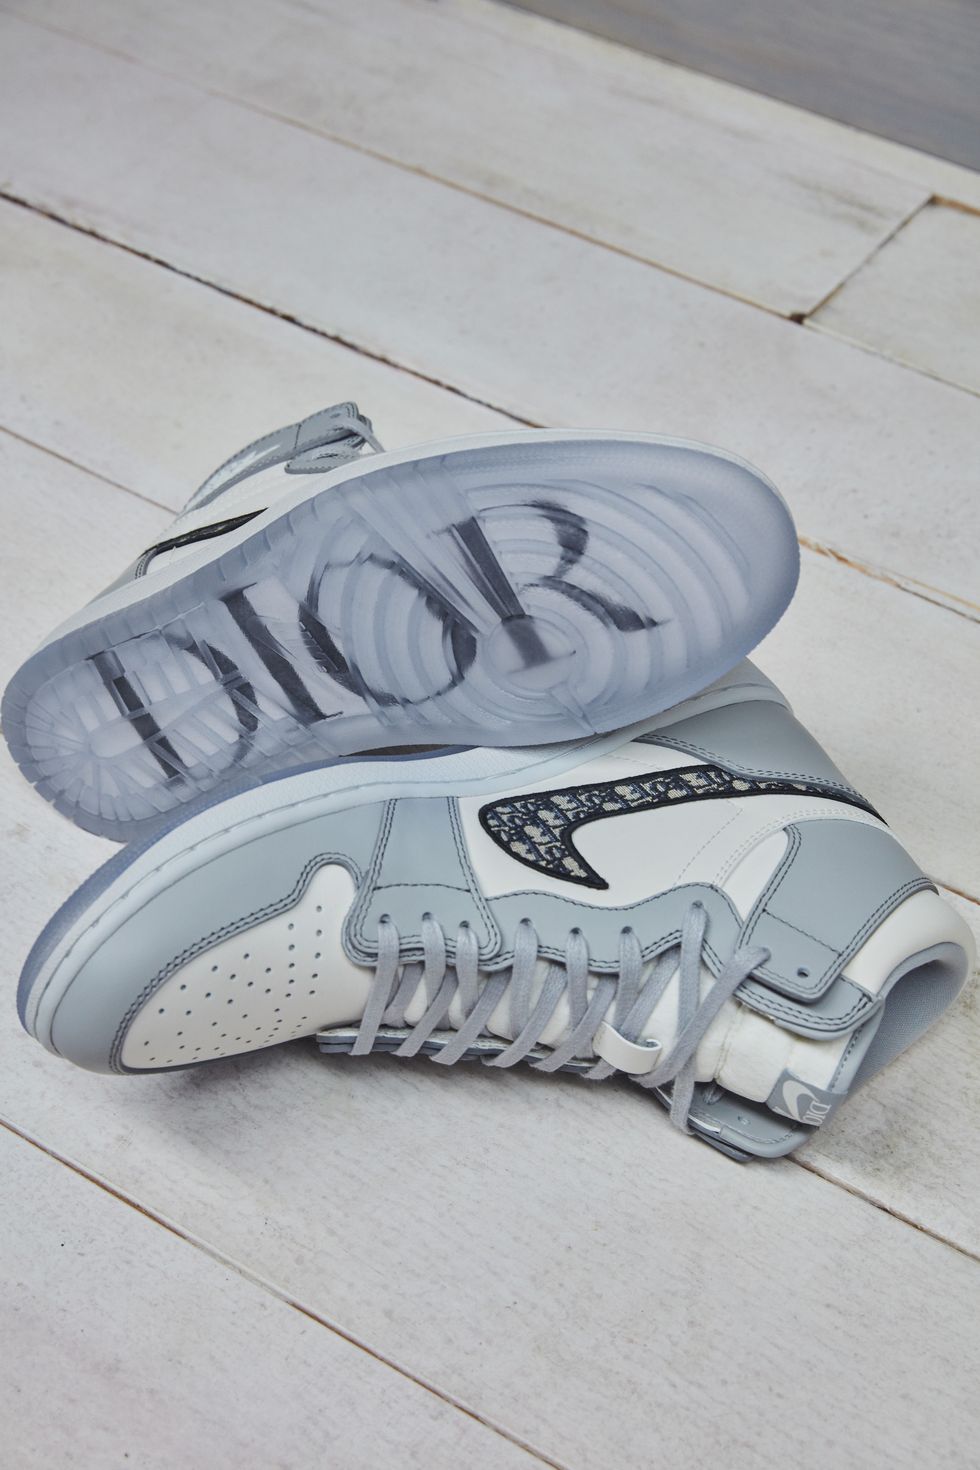 Dior x Jordan Basketball Shorts Grey